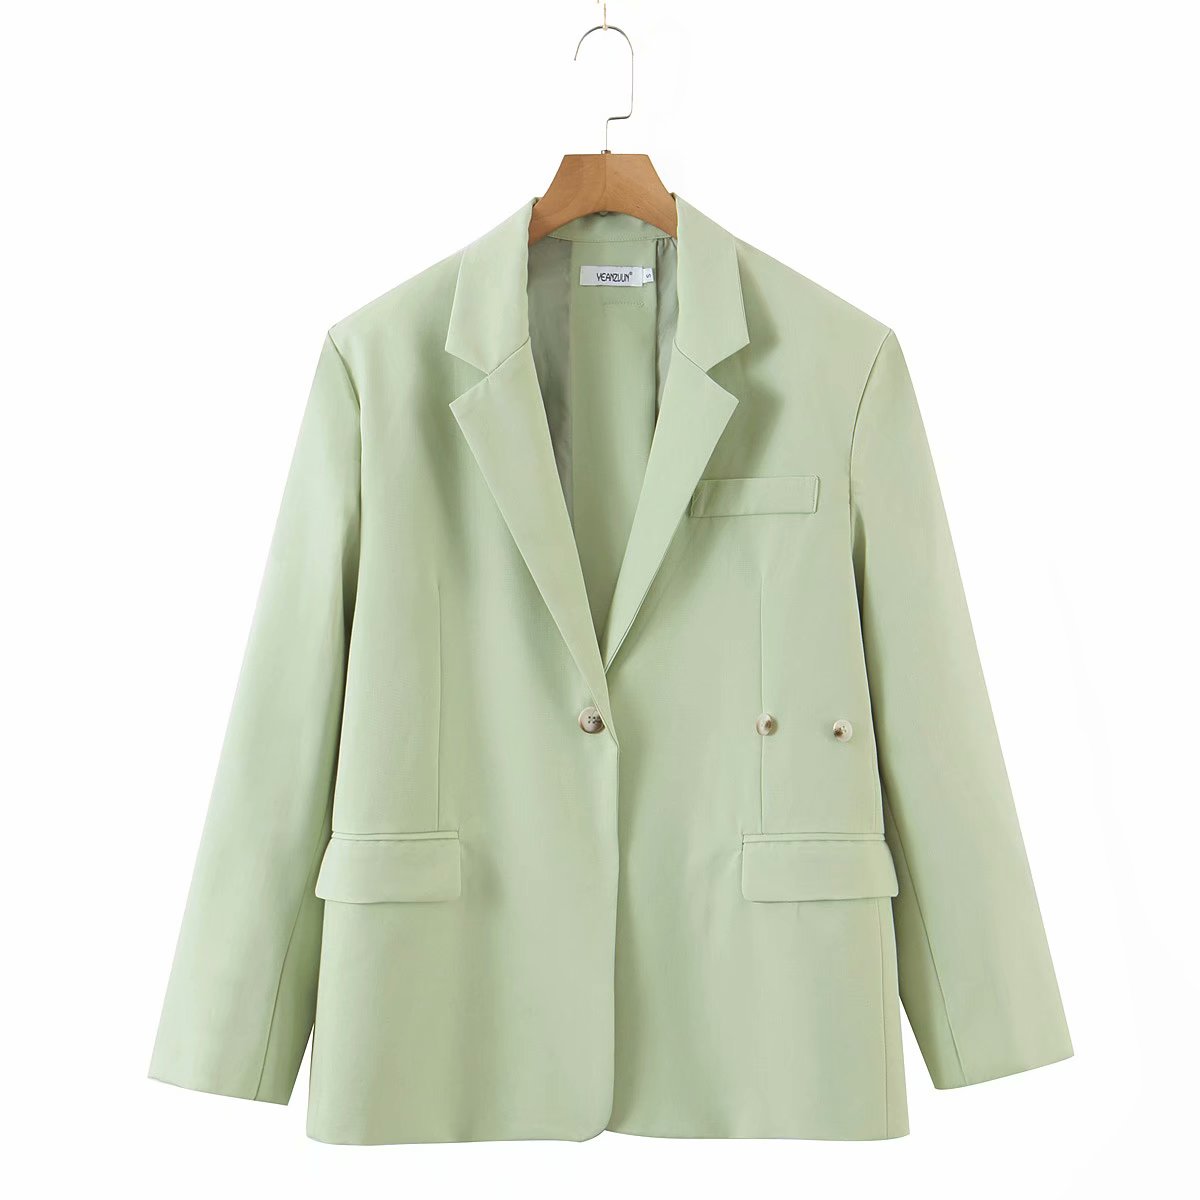 OOTDGIRL Women's Autumn Fashion Grass Green Blazer Ladies Chic Buttoned Top Retro Long Sleeve Lapel Casual Jacket